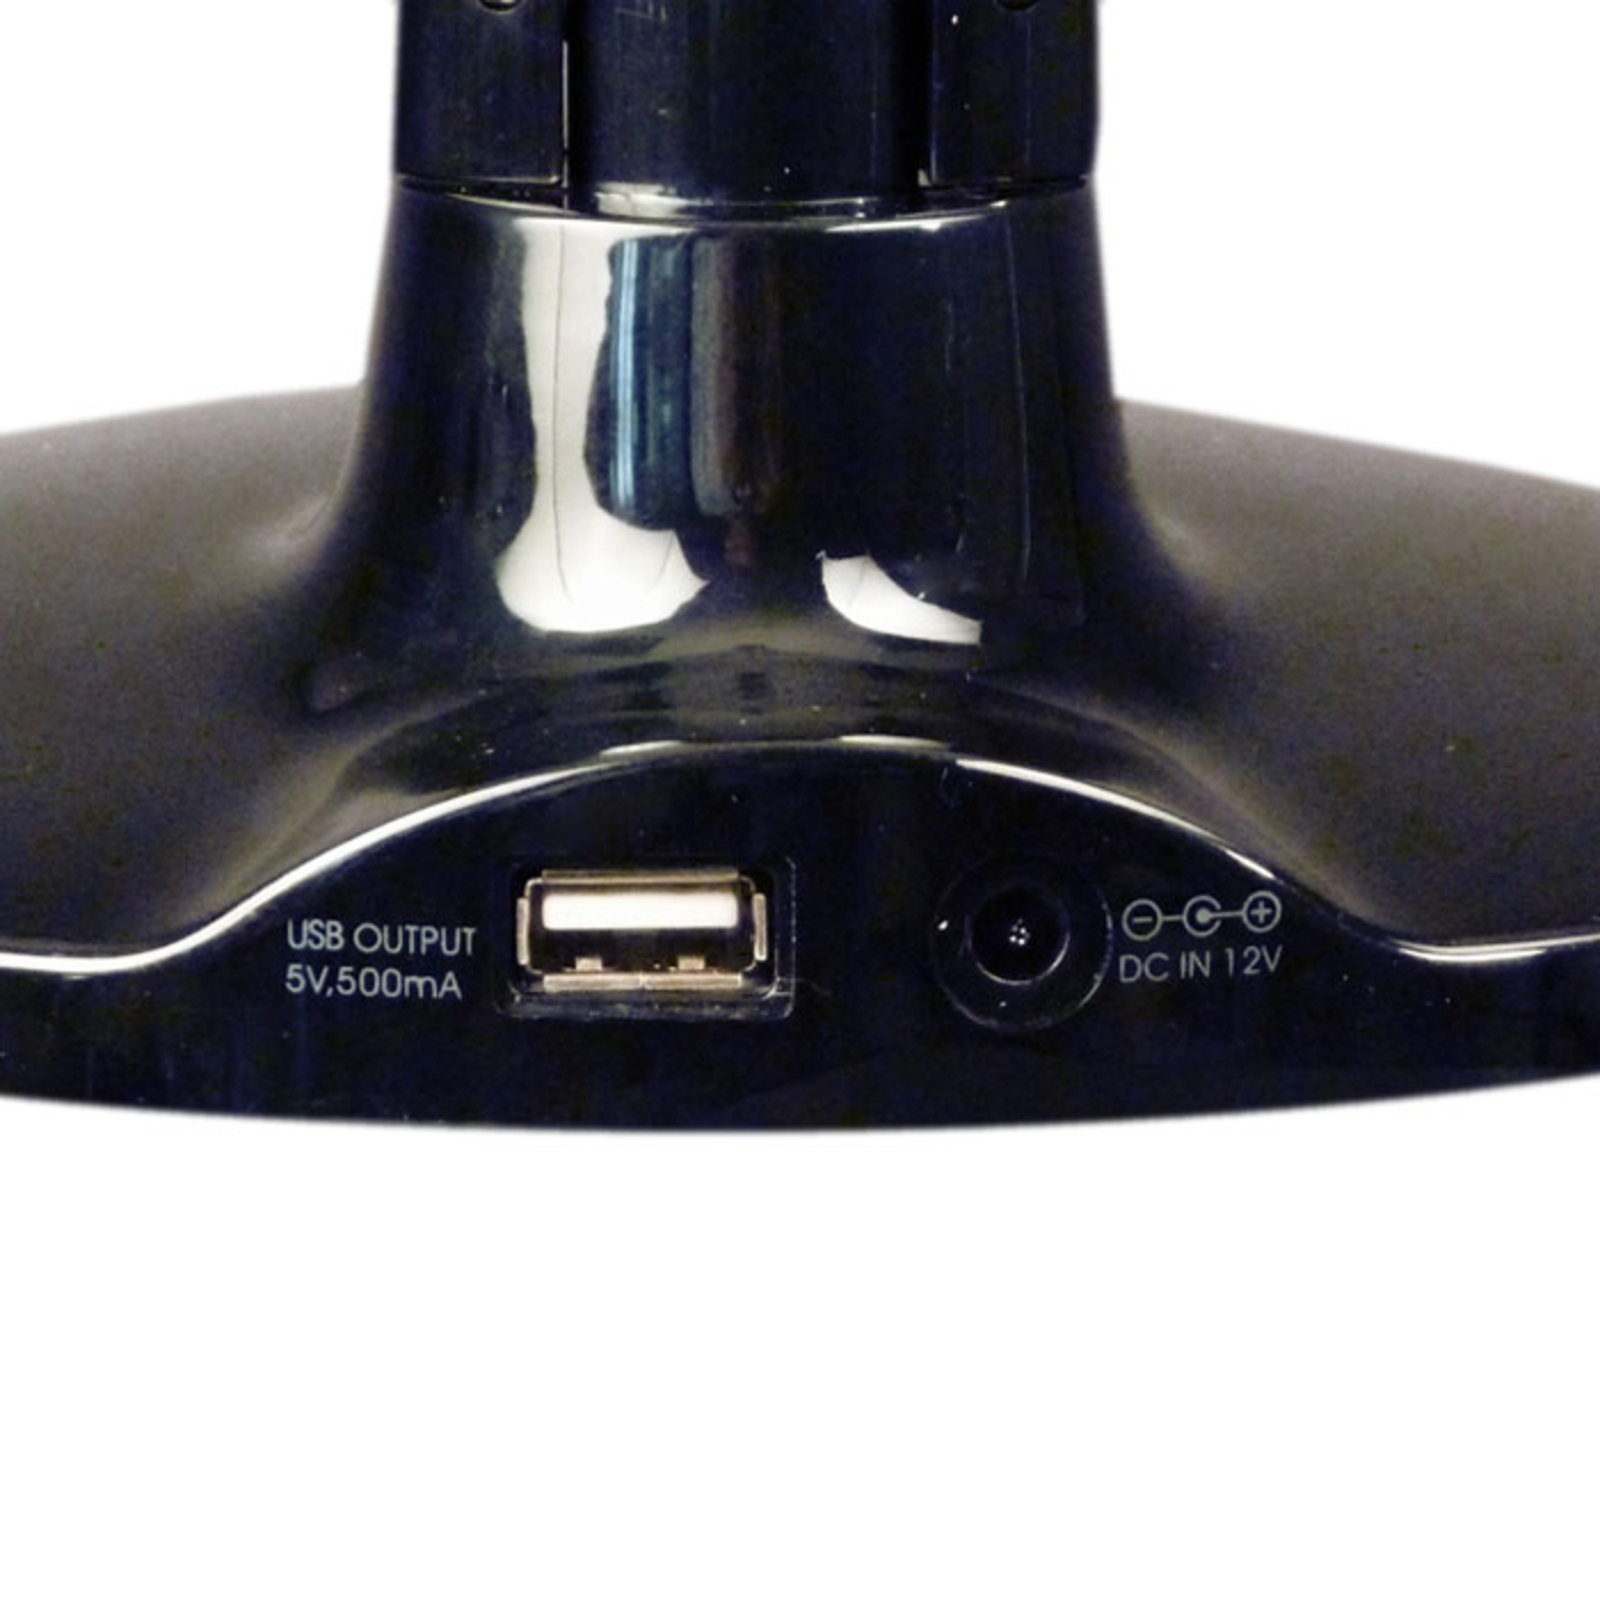 LED bureaulamp Success met klok, zwart